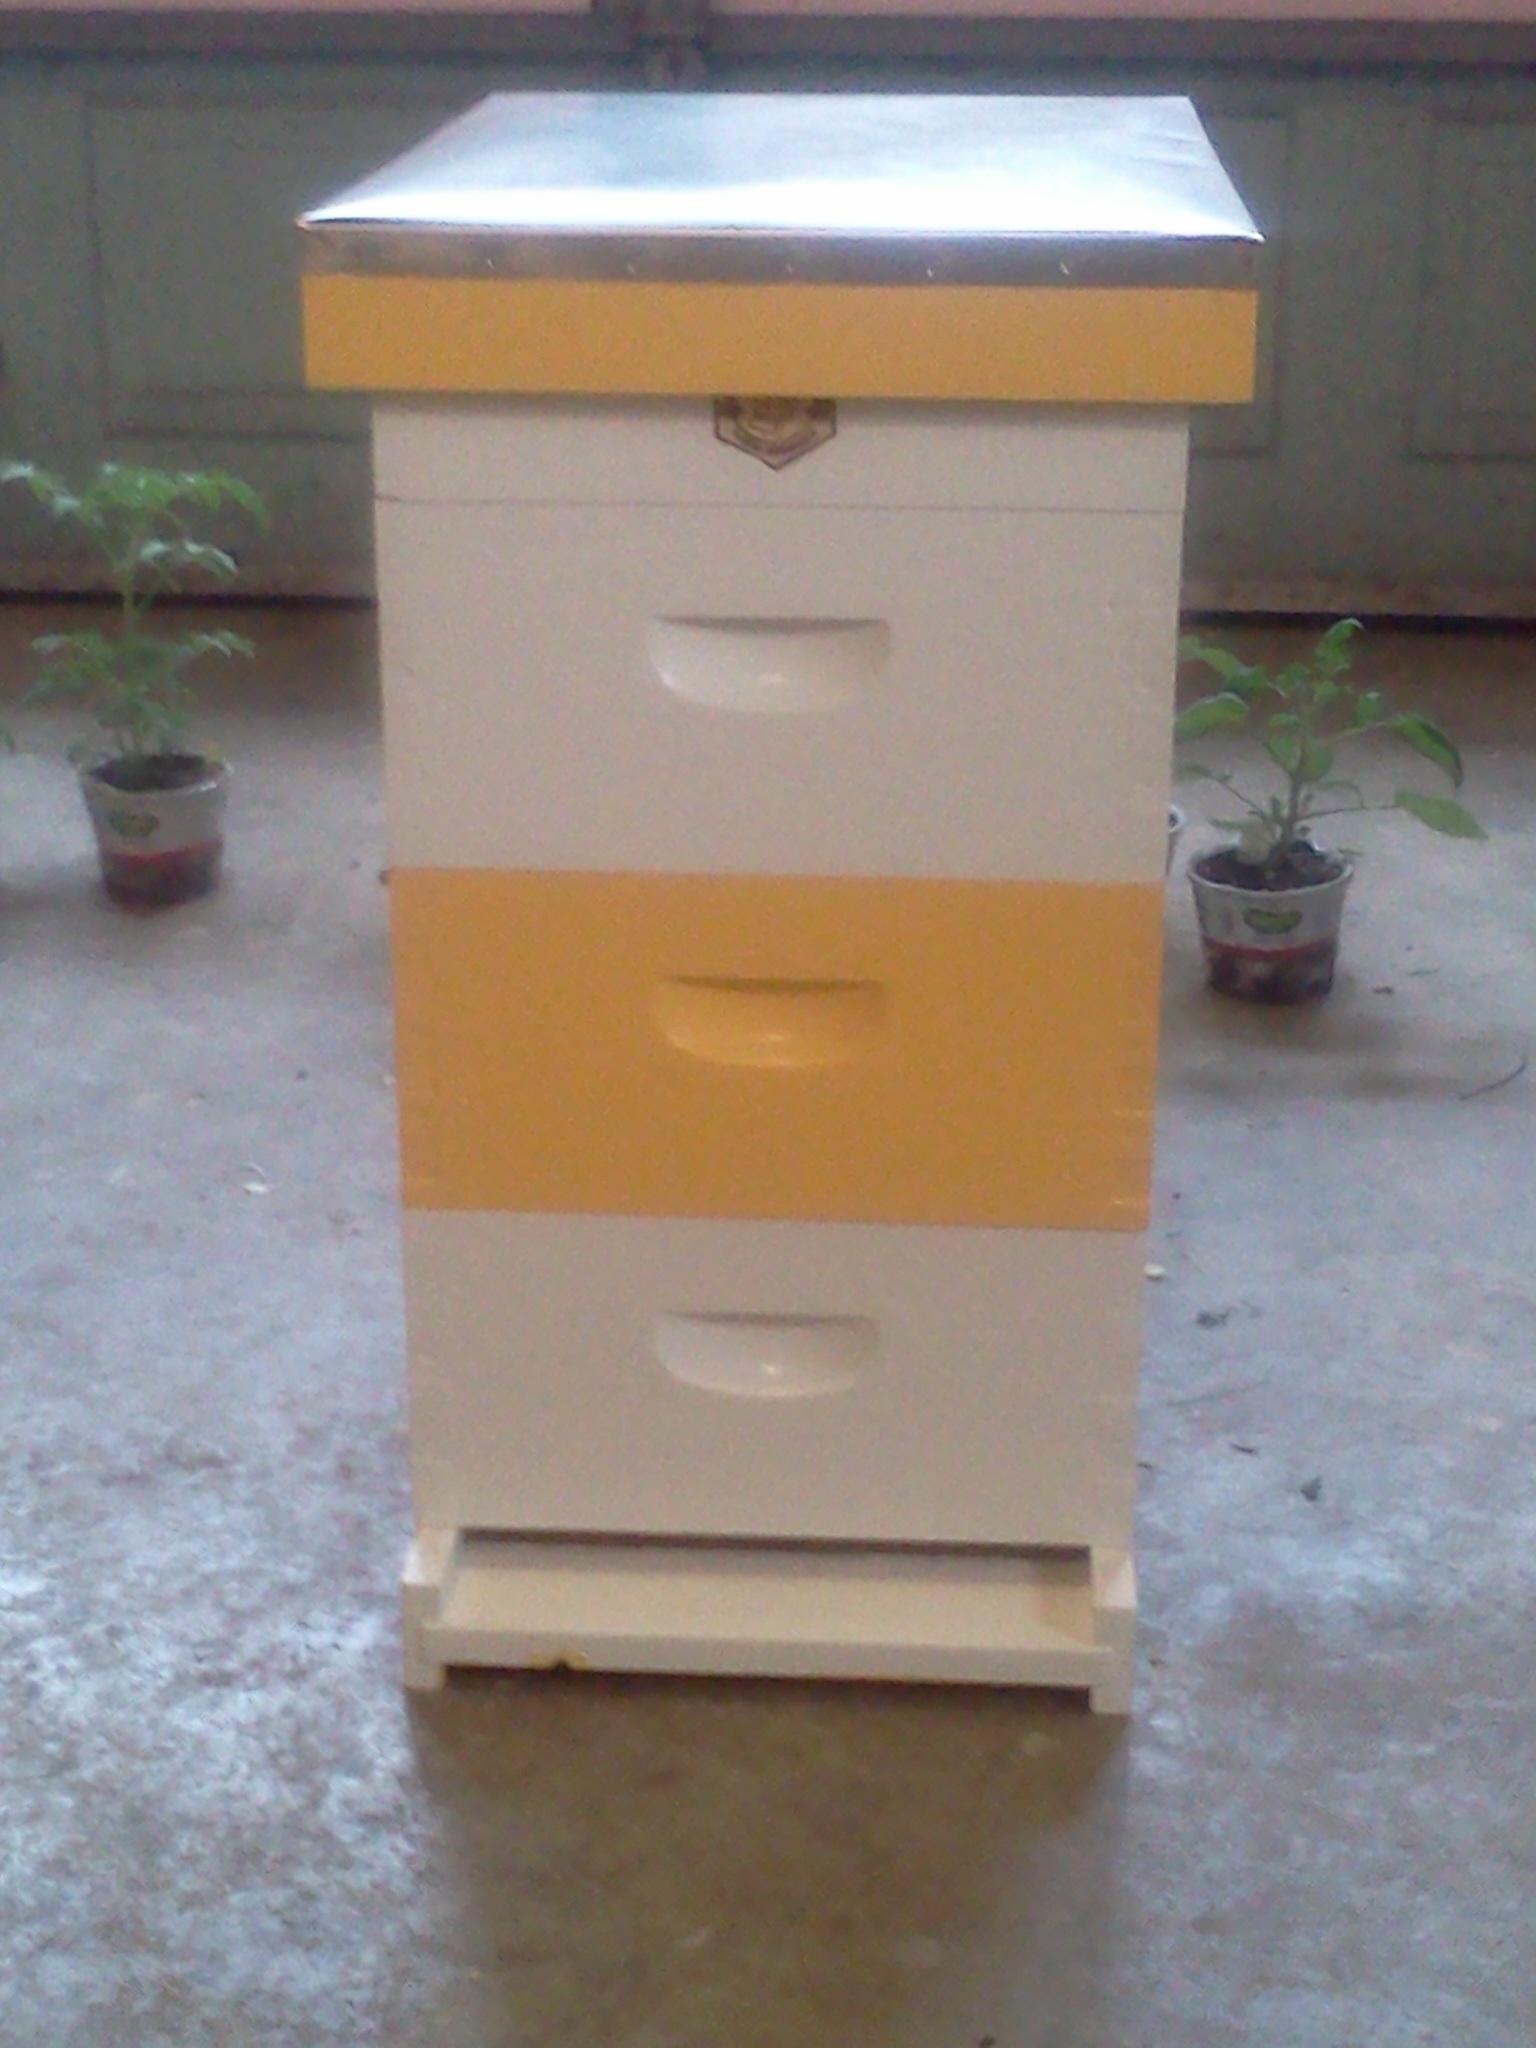 Beez New hives